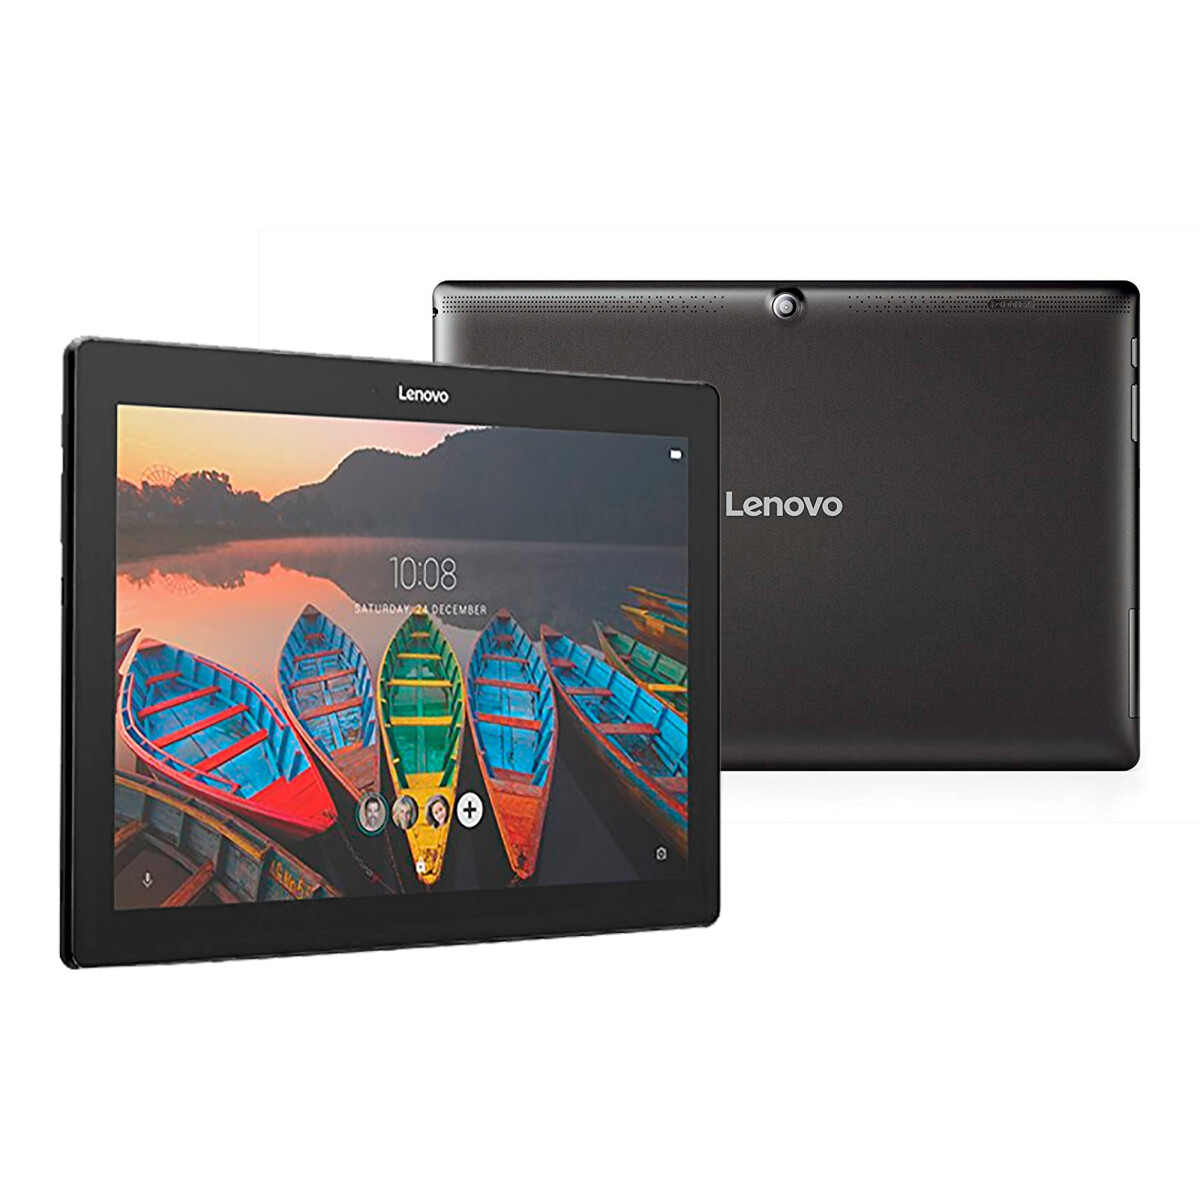 Lenovo - Tablet Tab E10 - 10,1'' Multitáctil Ips. Qualcomm Snapdragon APQ8009. Qualcomm Adreno 304. - 001 